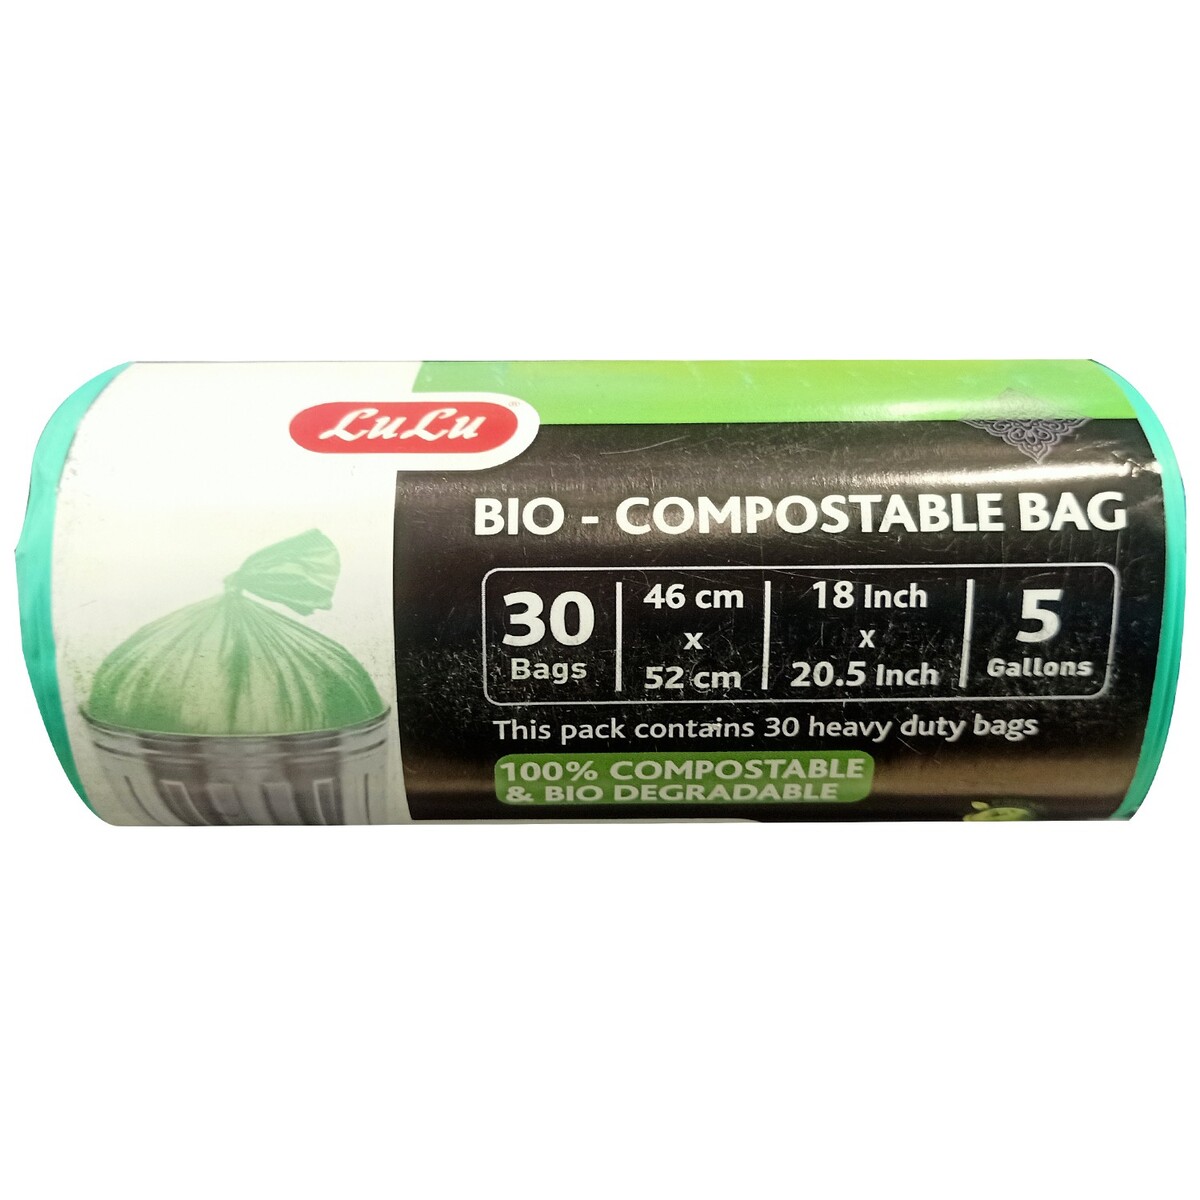 Lulu Compostable Garbage Bag Green 46x52 30s